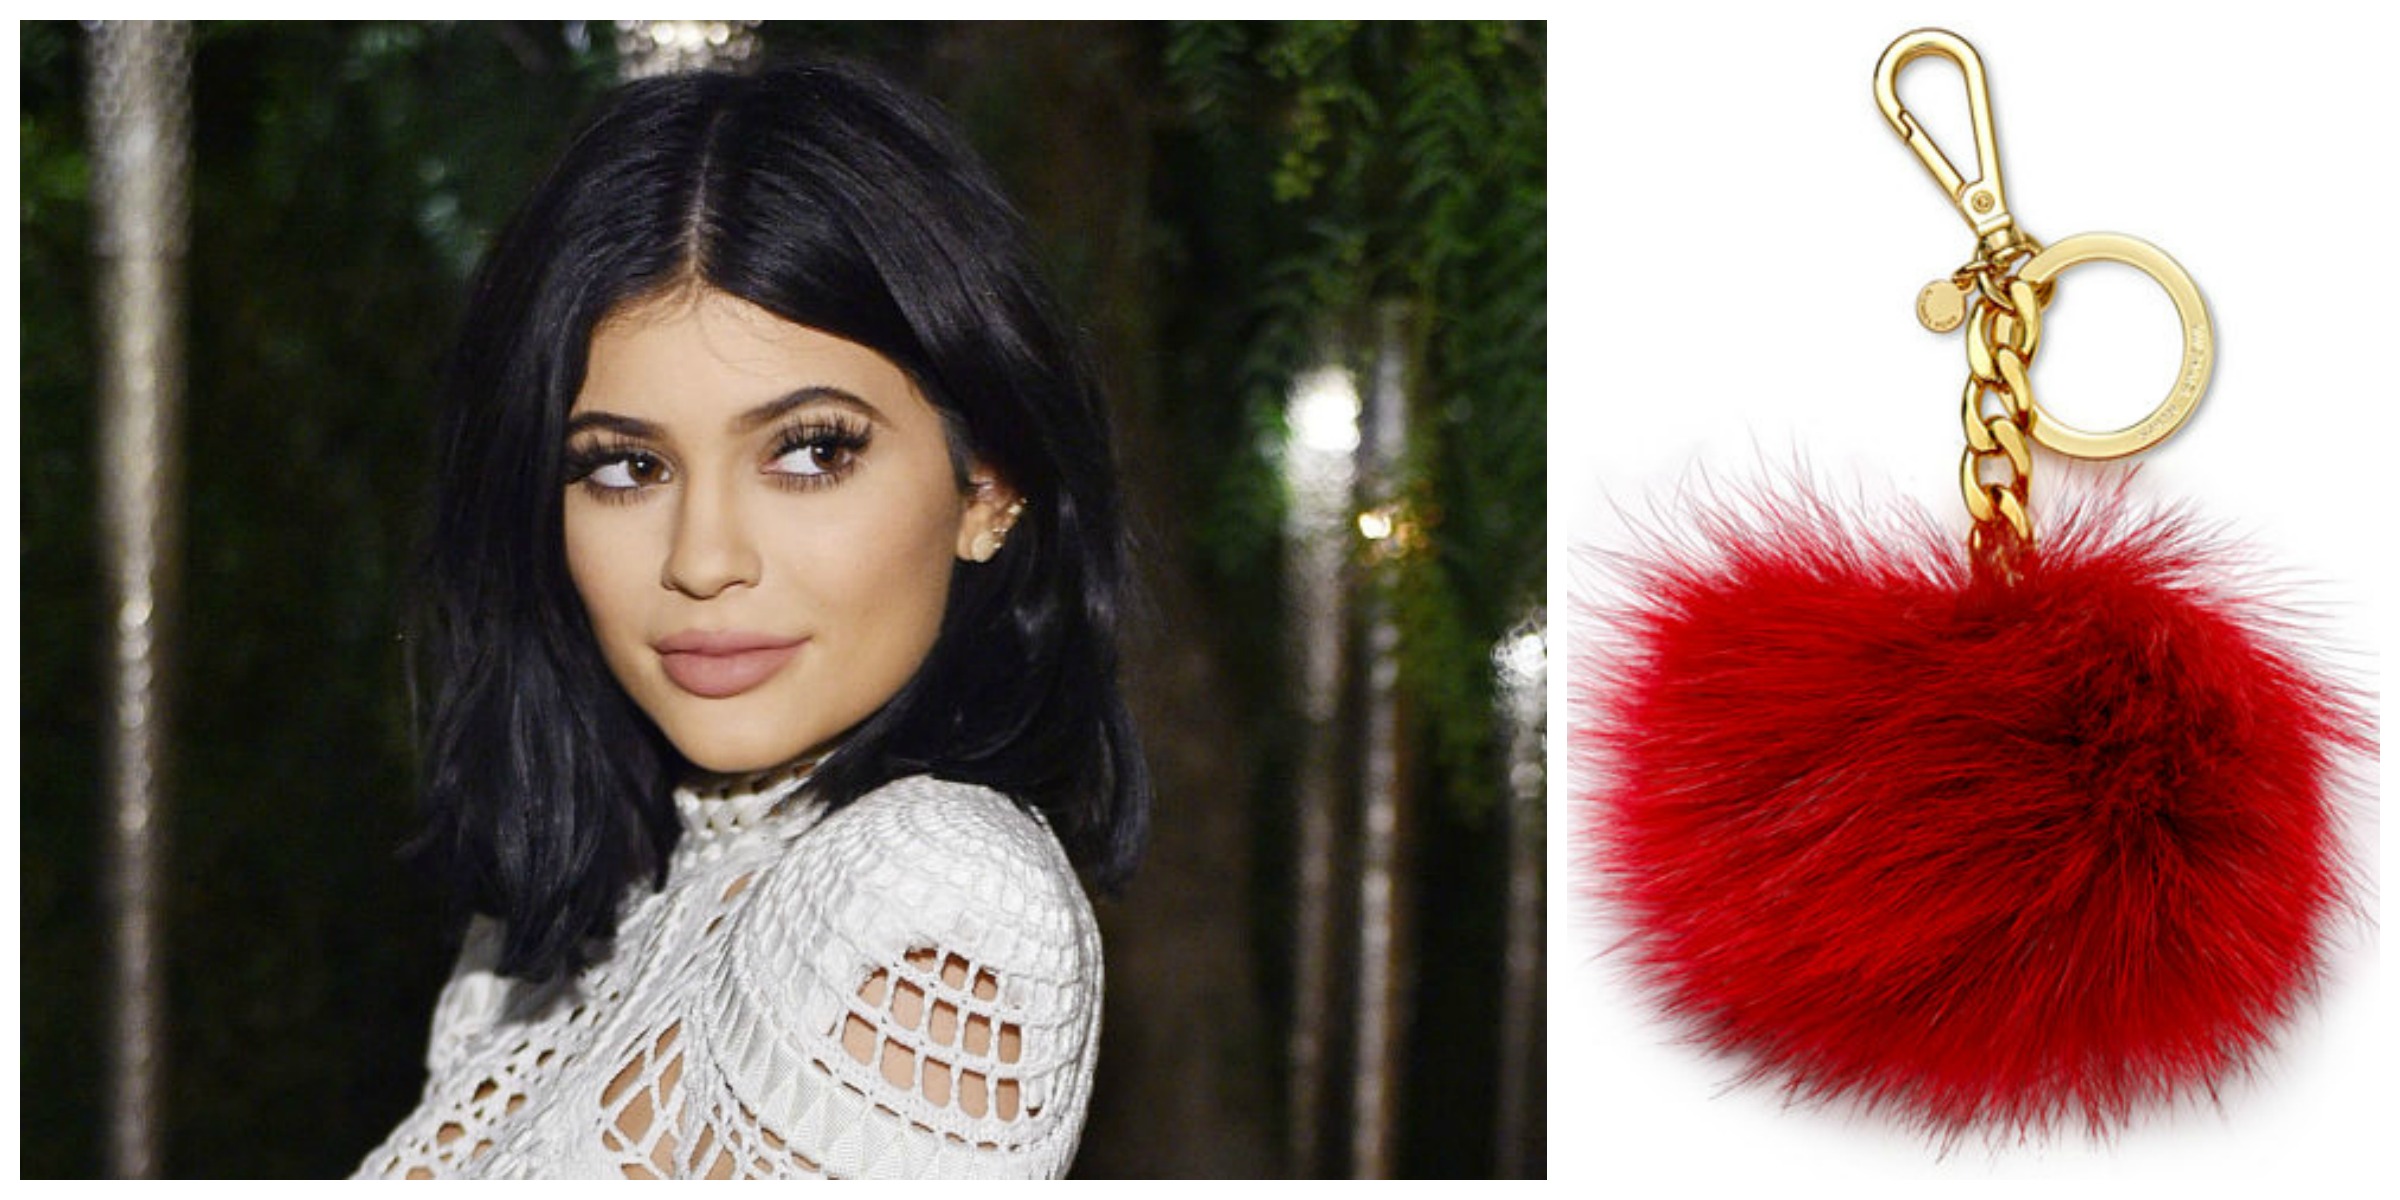 Kylie's Fendi Pom Pom Bag Charm Sells 